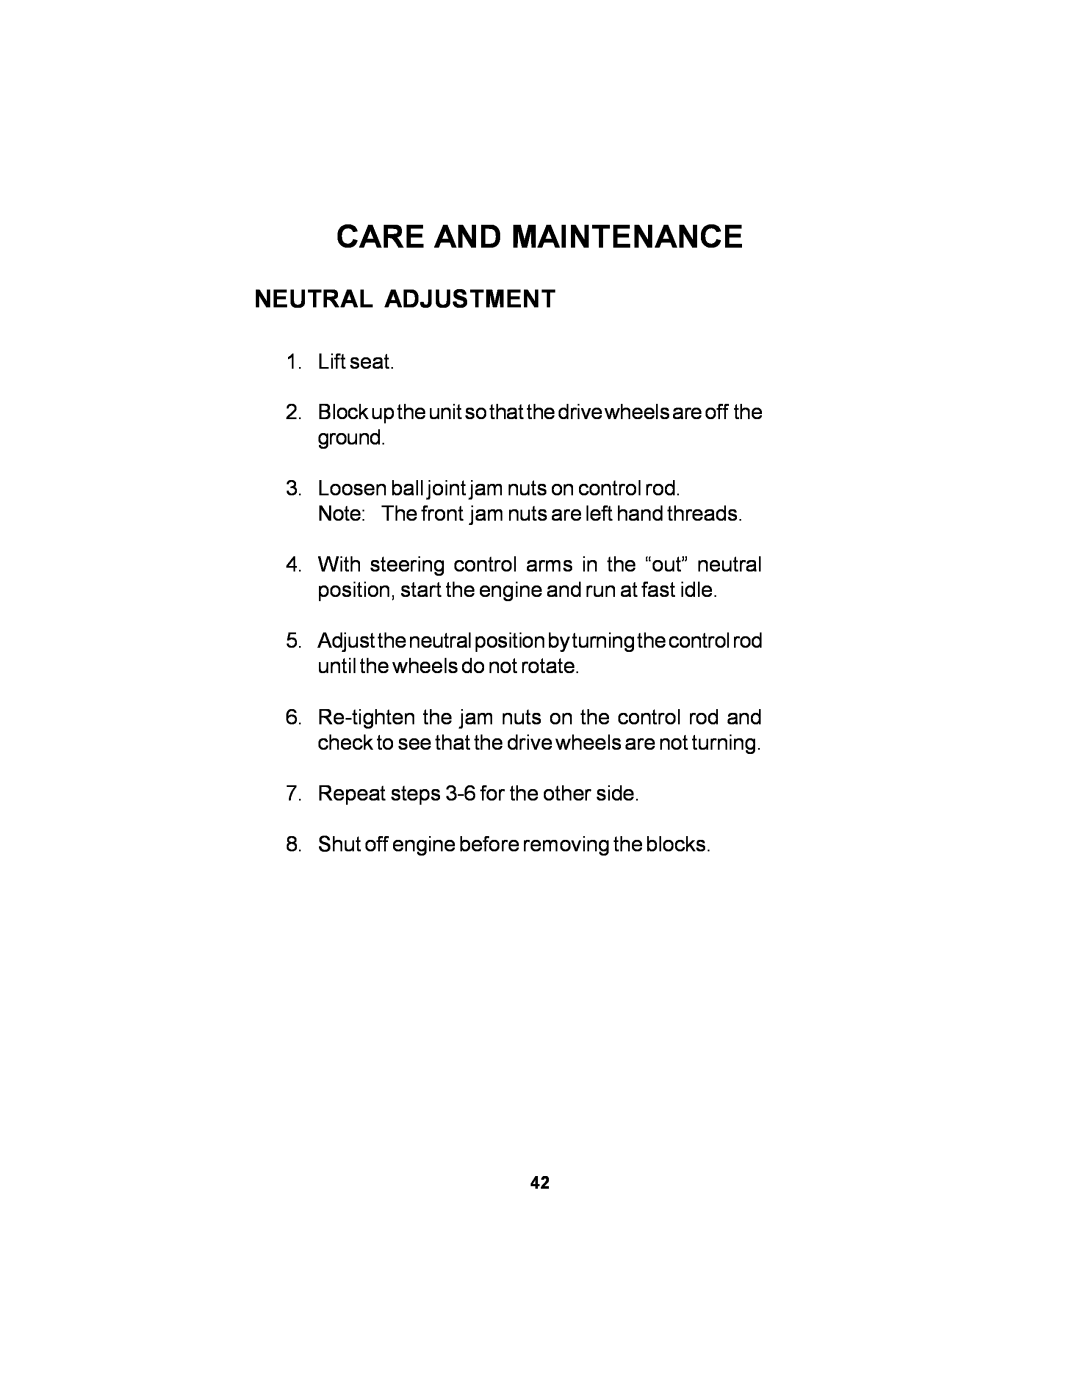 Dixon 18626-106 manual Neutral Adjustment, Care And Maintenance 